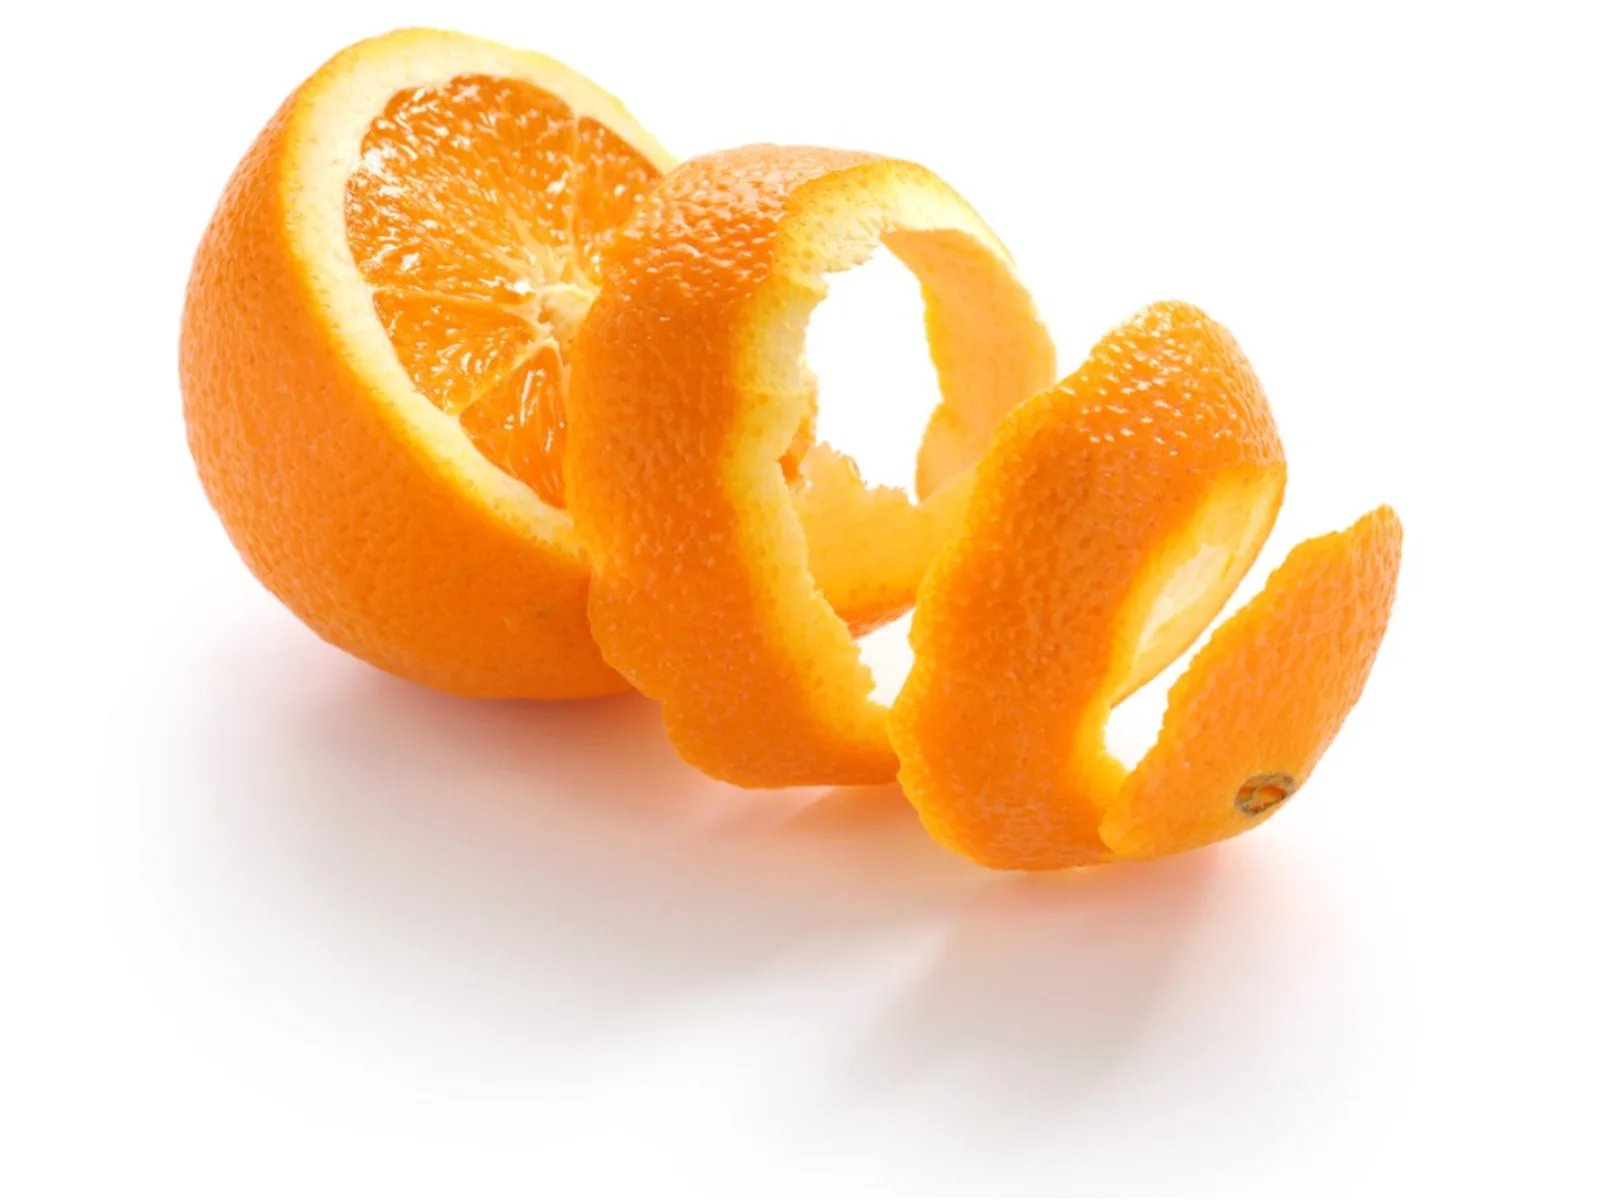 Cut the Orange into Rings